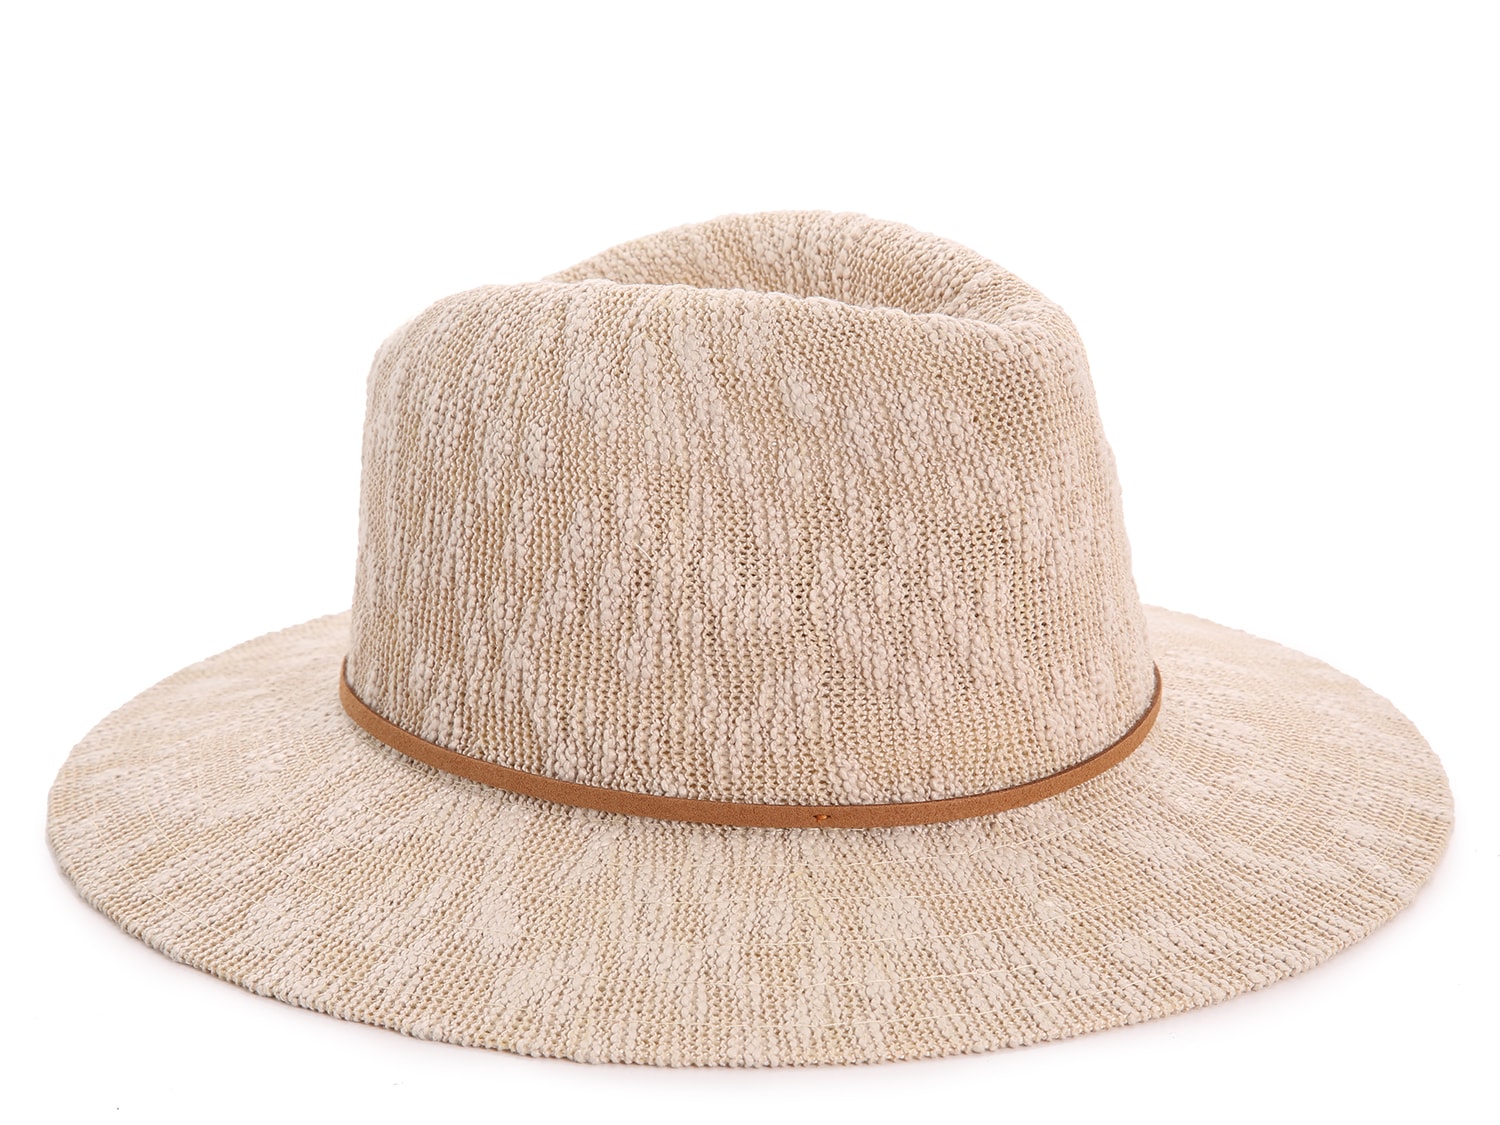 Crown Vintage Woven Women's Panama Hat - Free Shipping | DSW